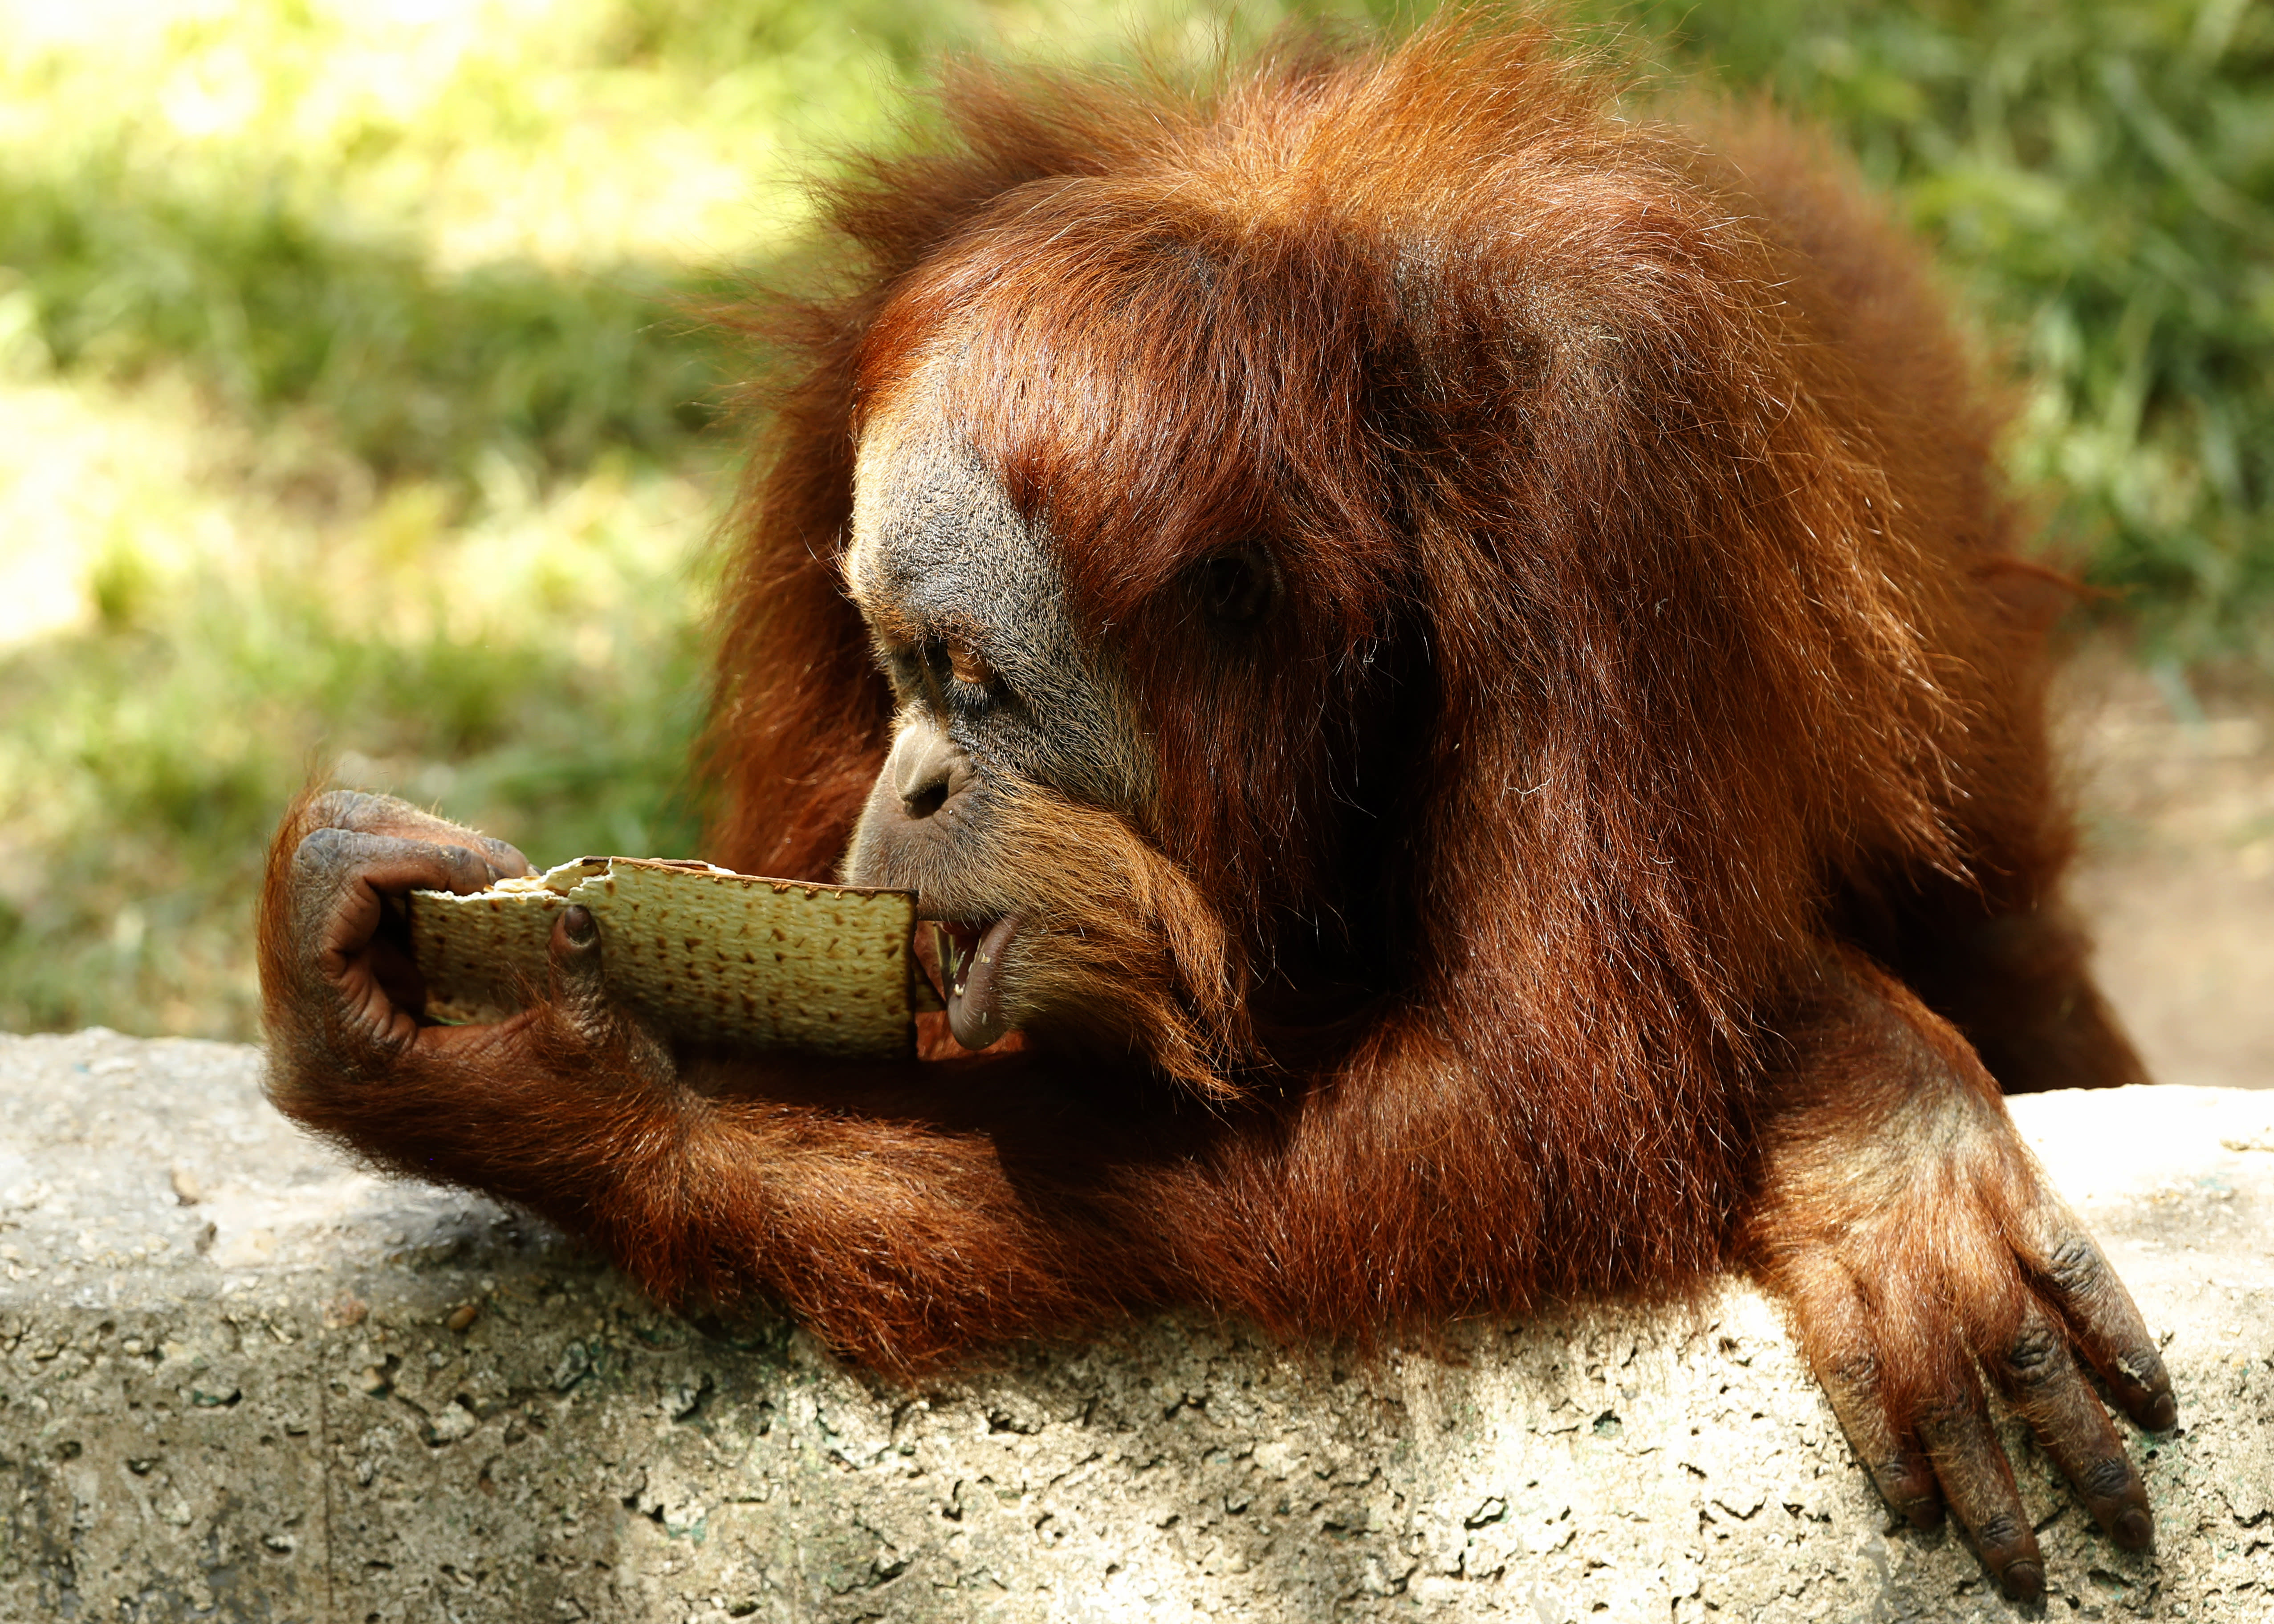 An orangutan eats the traditional Matza (unleavened bread) in preparation for the upcoming Jewish holiday of Passover, at the Ramat Gan Safari Park near Tel Aviv (Jack Guez/AFP)